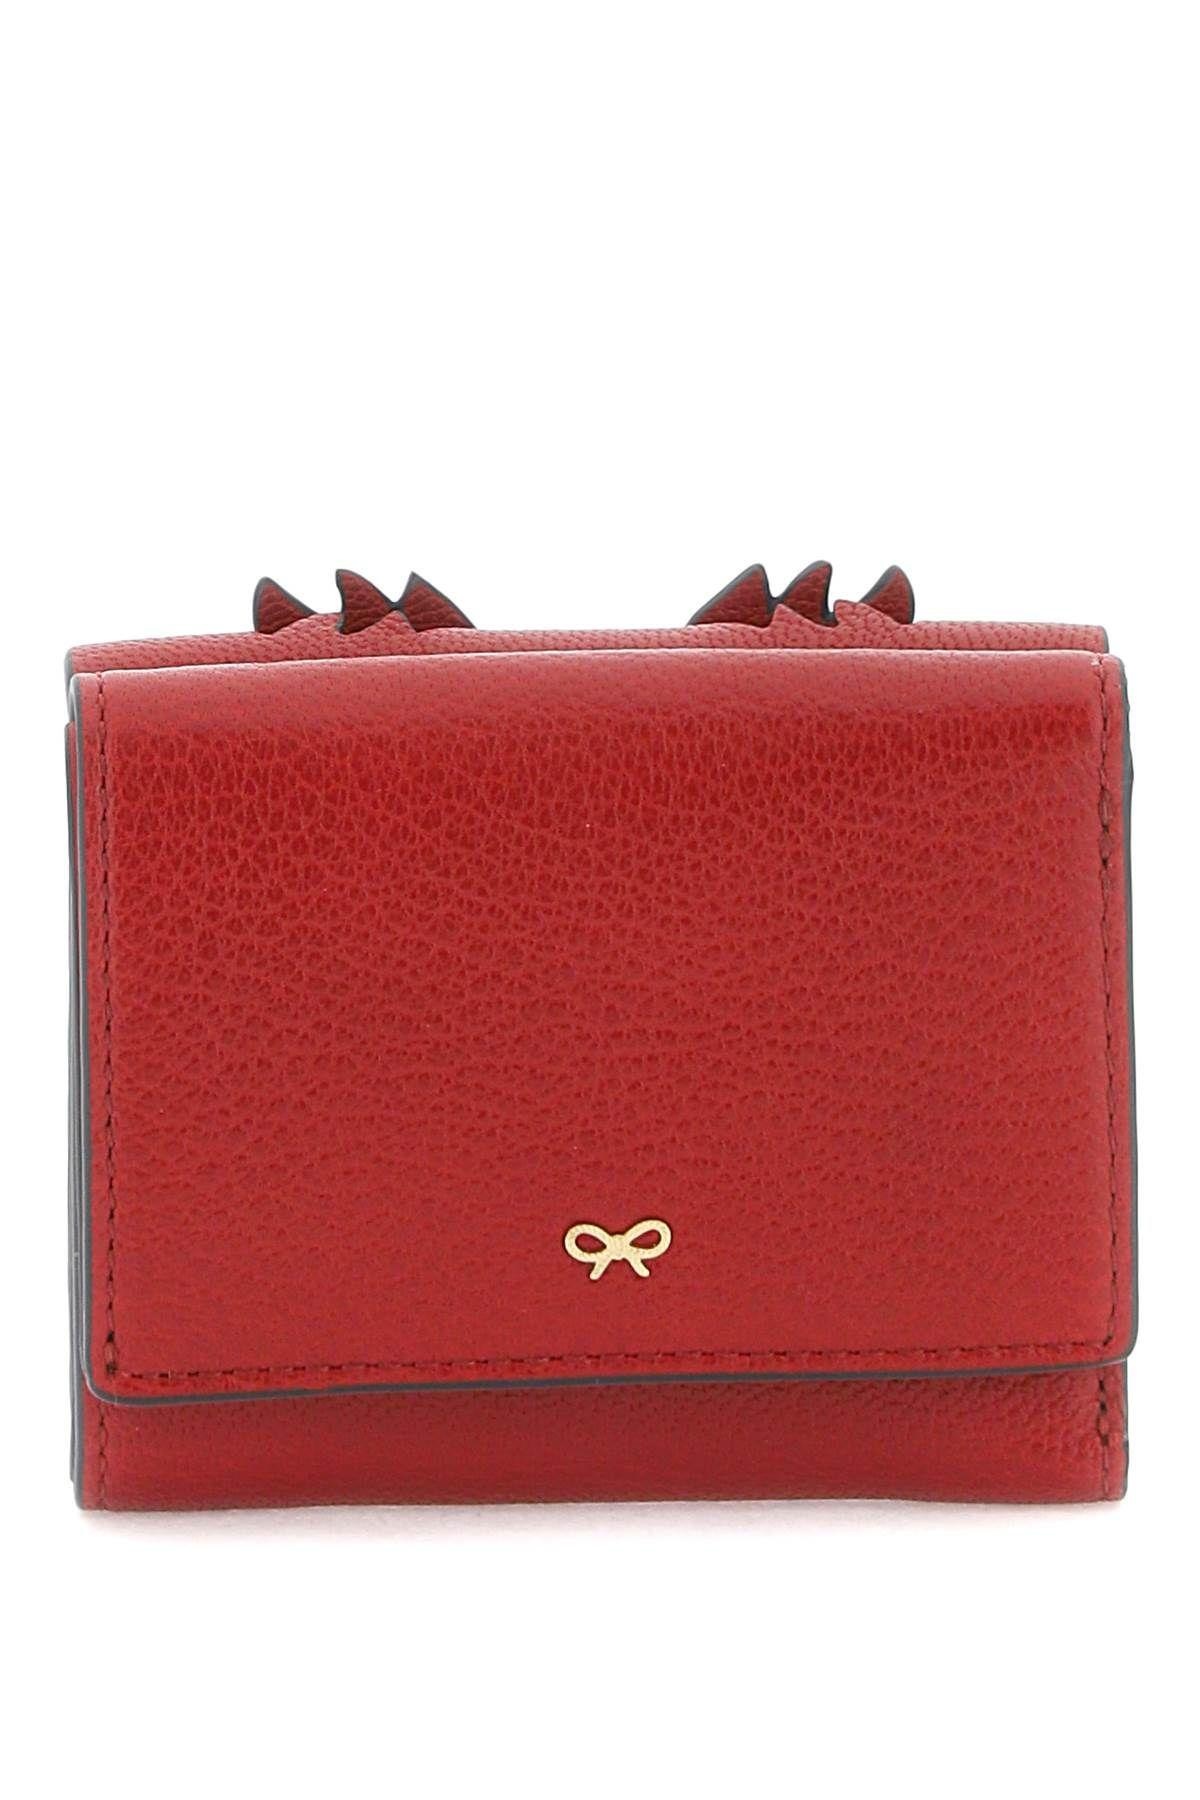 Dragon mini trifold wallet Anya Hindmarch - 3